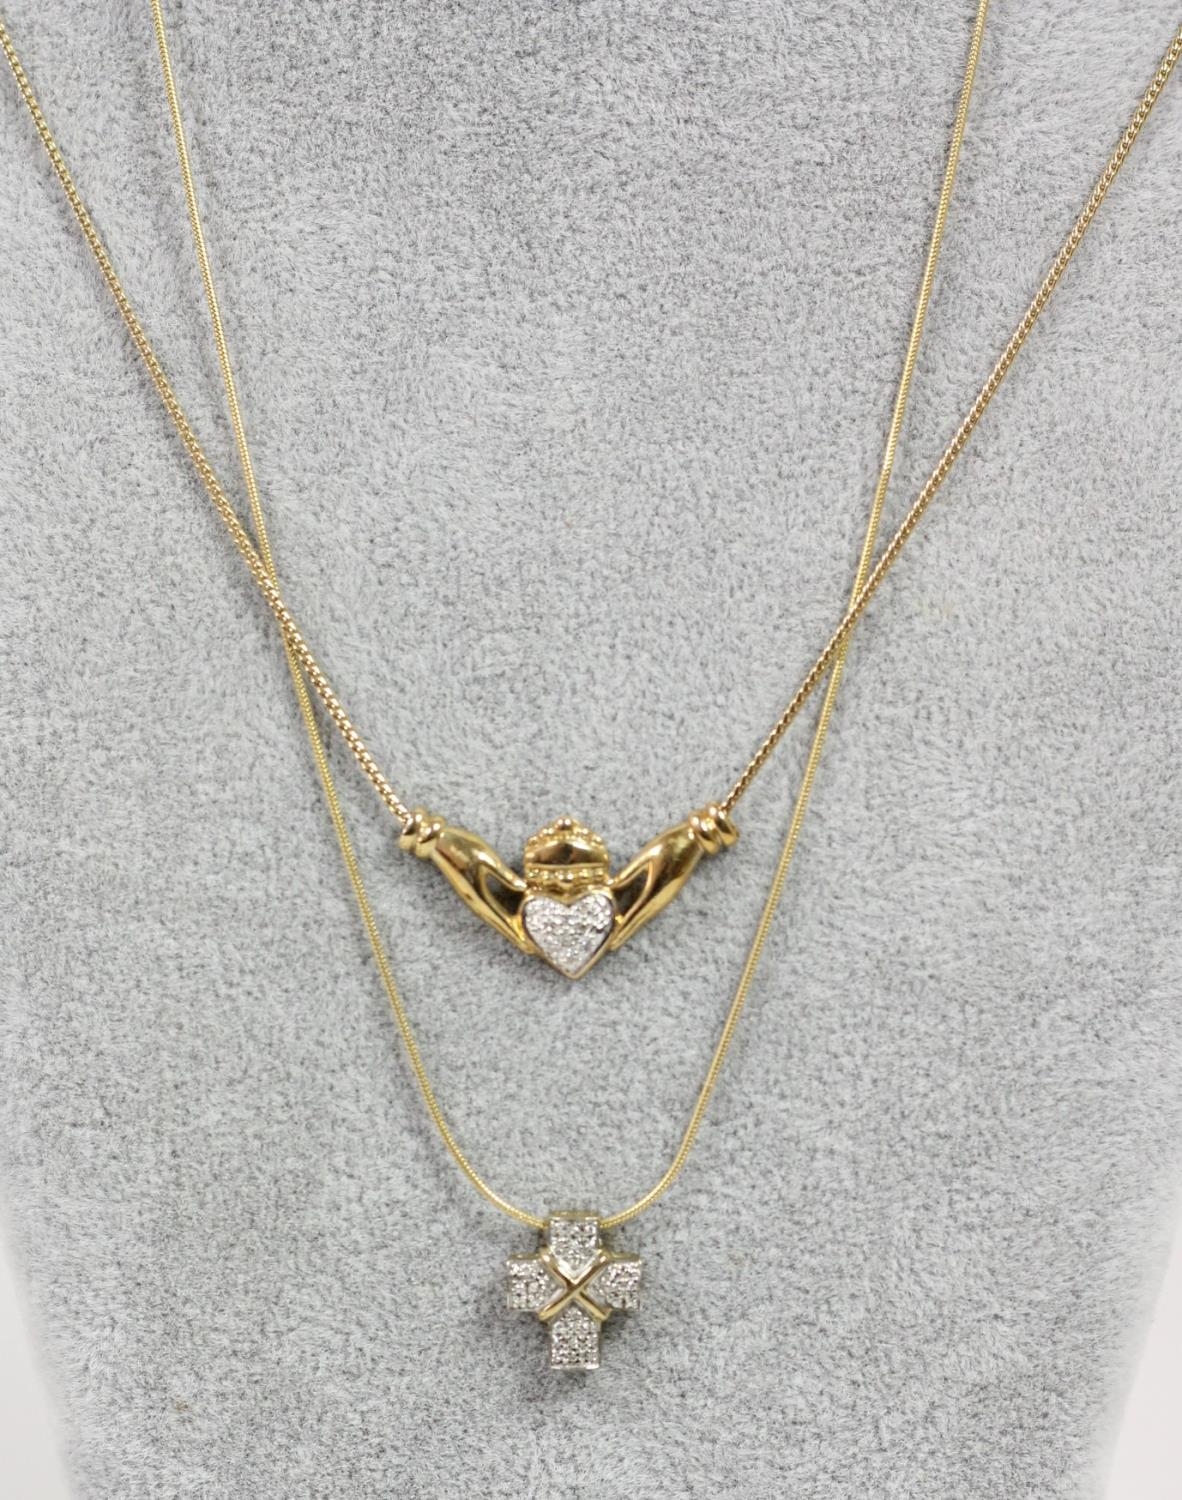 A 9ct gold and diamond set cross pendant, chain and a 9ct gold and diamond set clasped heart